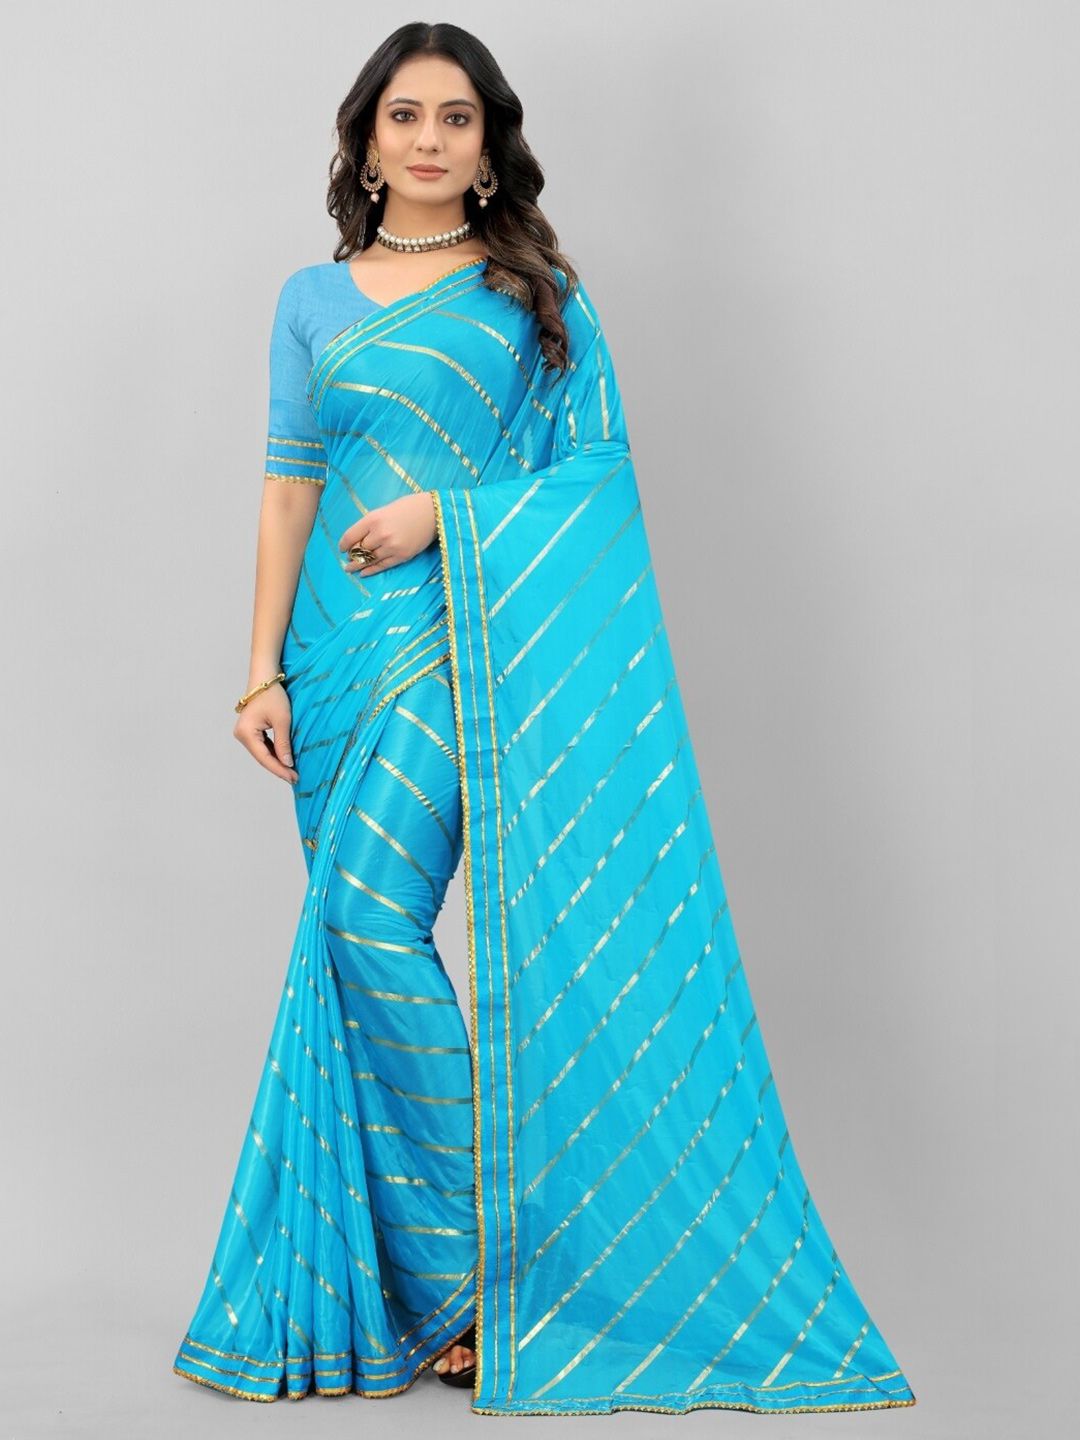 APNISHA Women Blue & Gold-Toned Embellished Saree Price in India